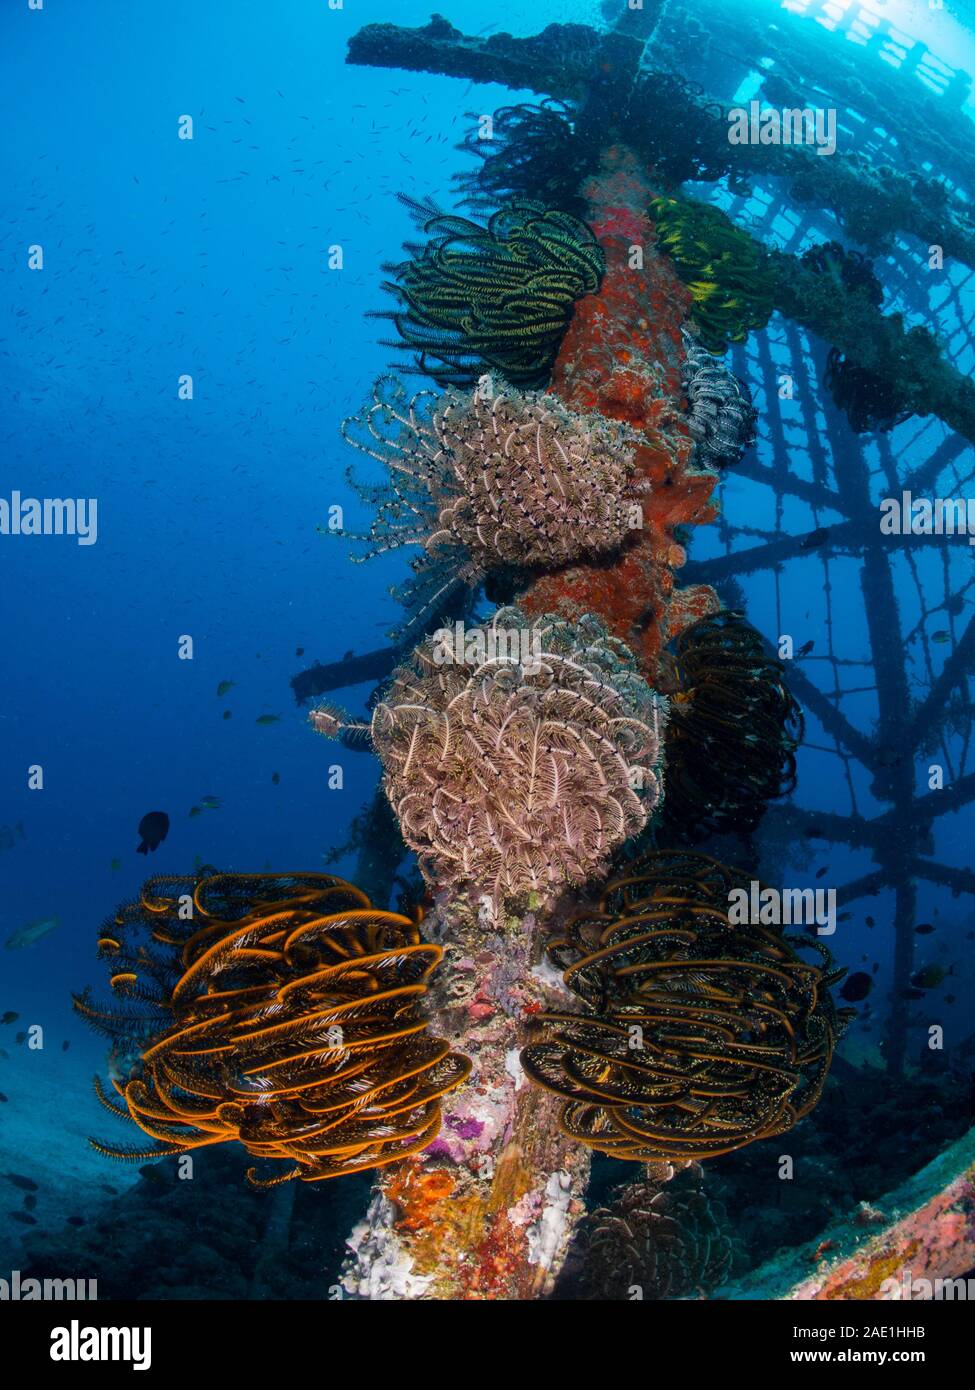 Crinoids, Comanthina nobilis and Comanthina schlegelii on the reef, Malaysia Stock Photo